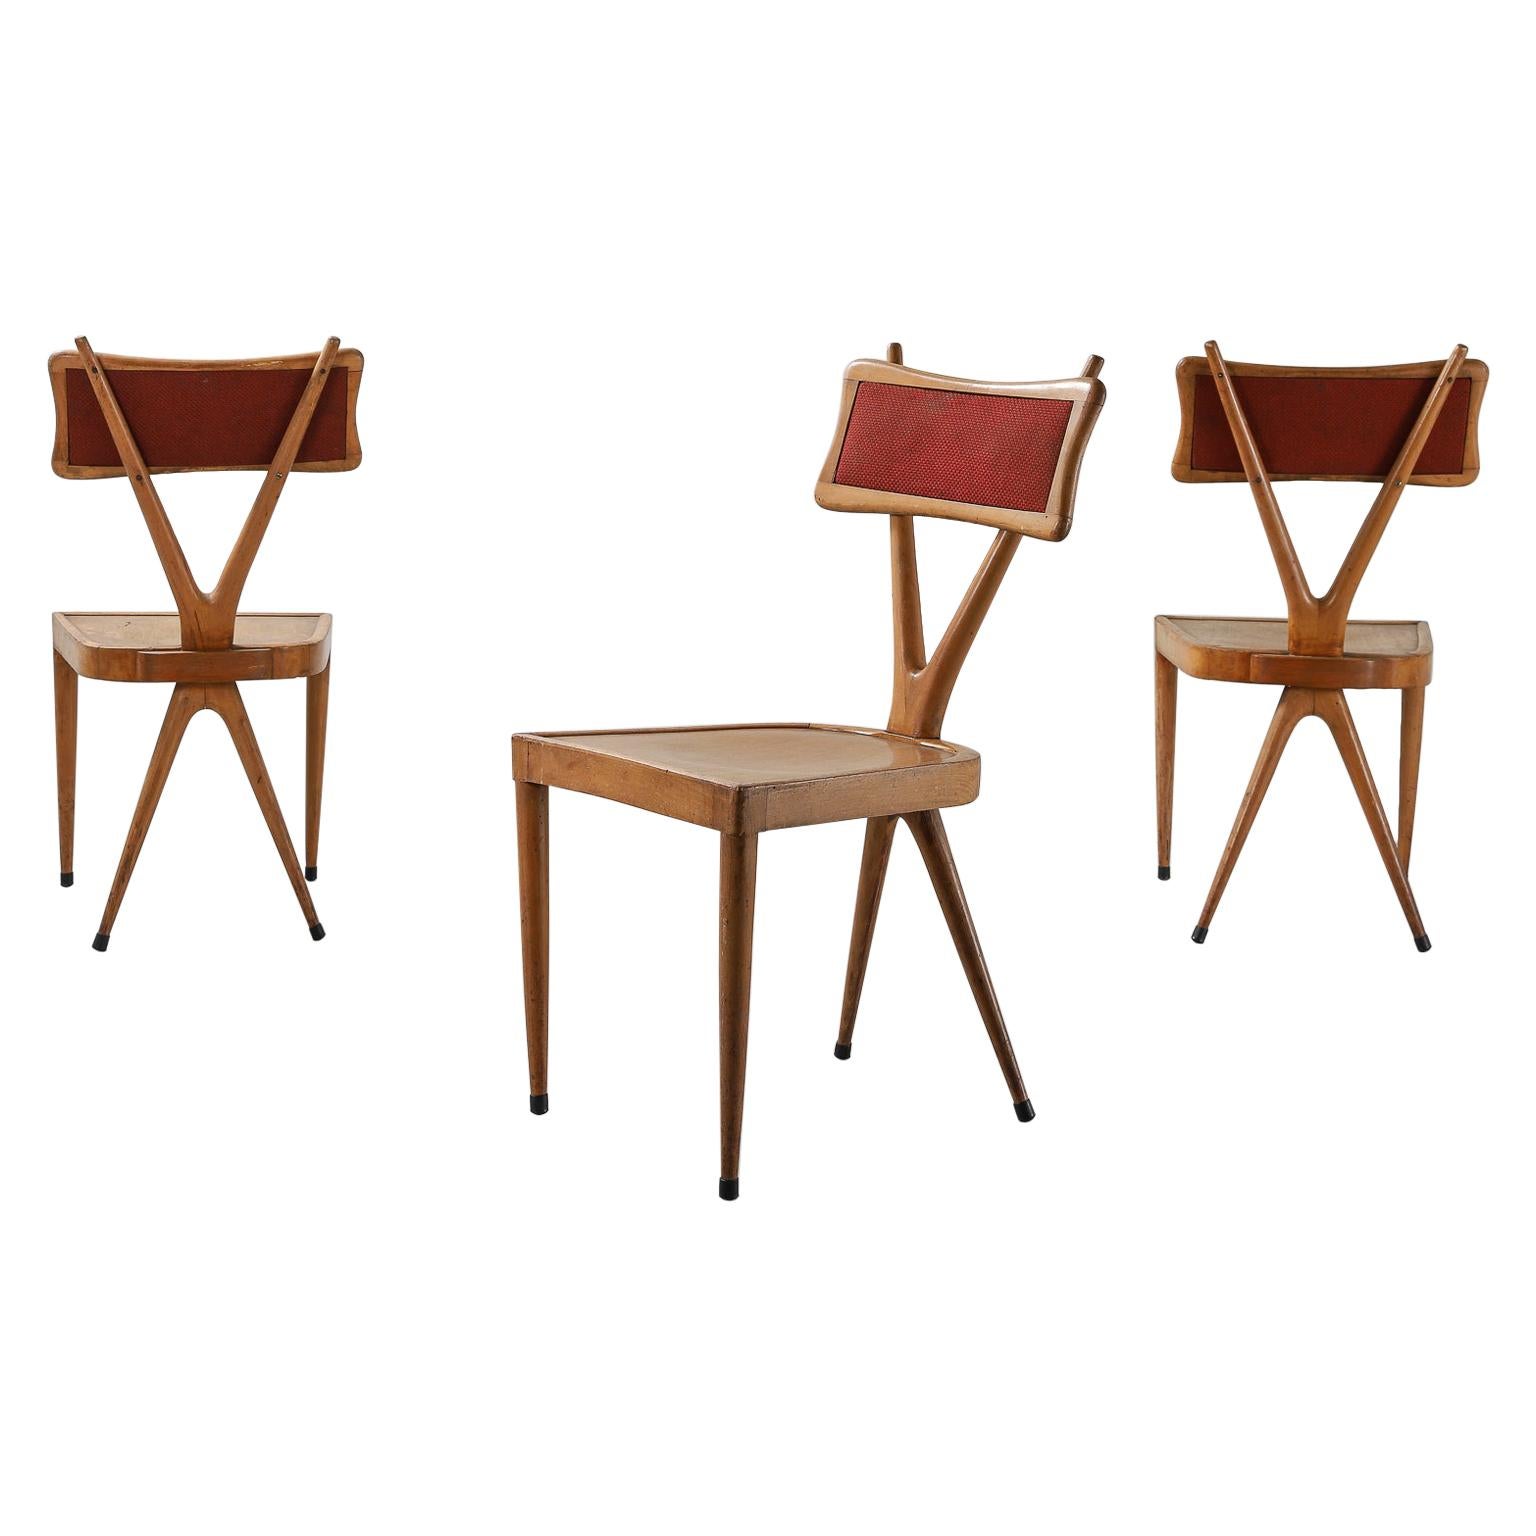 Vigorelli Gianni Set of 3 Wood and Original Fabric Chairs, 1950s